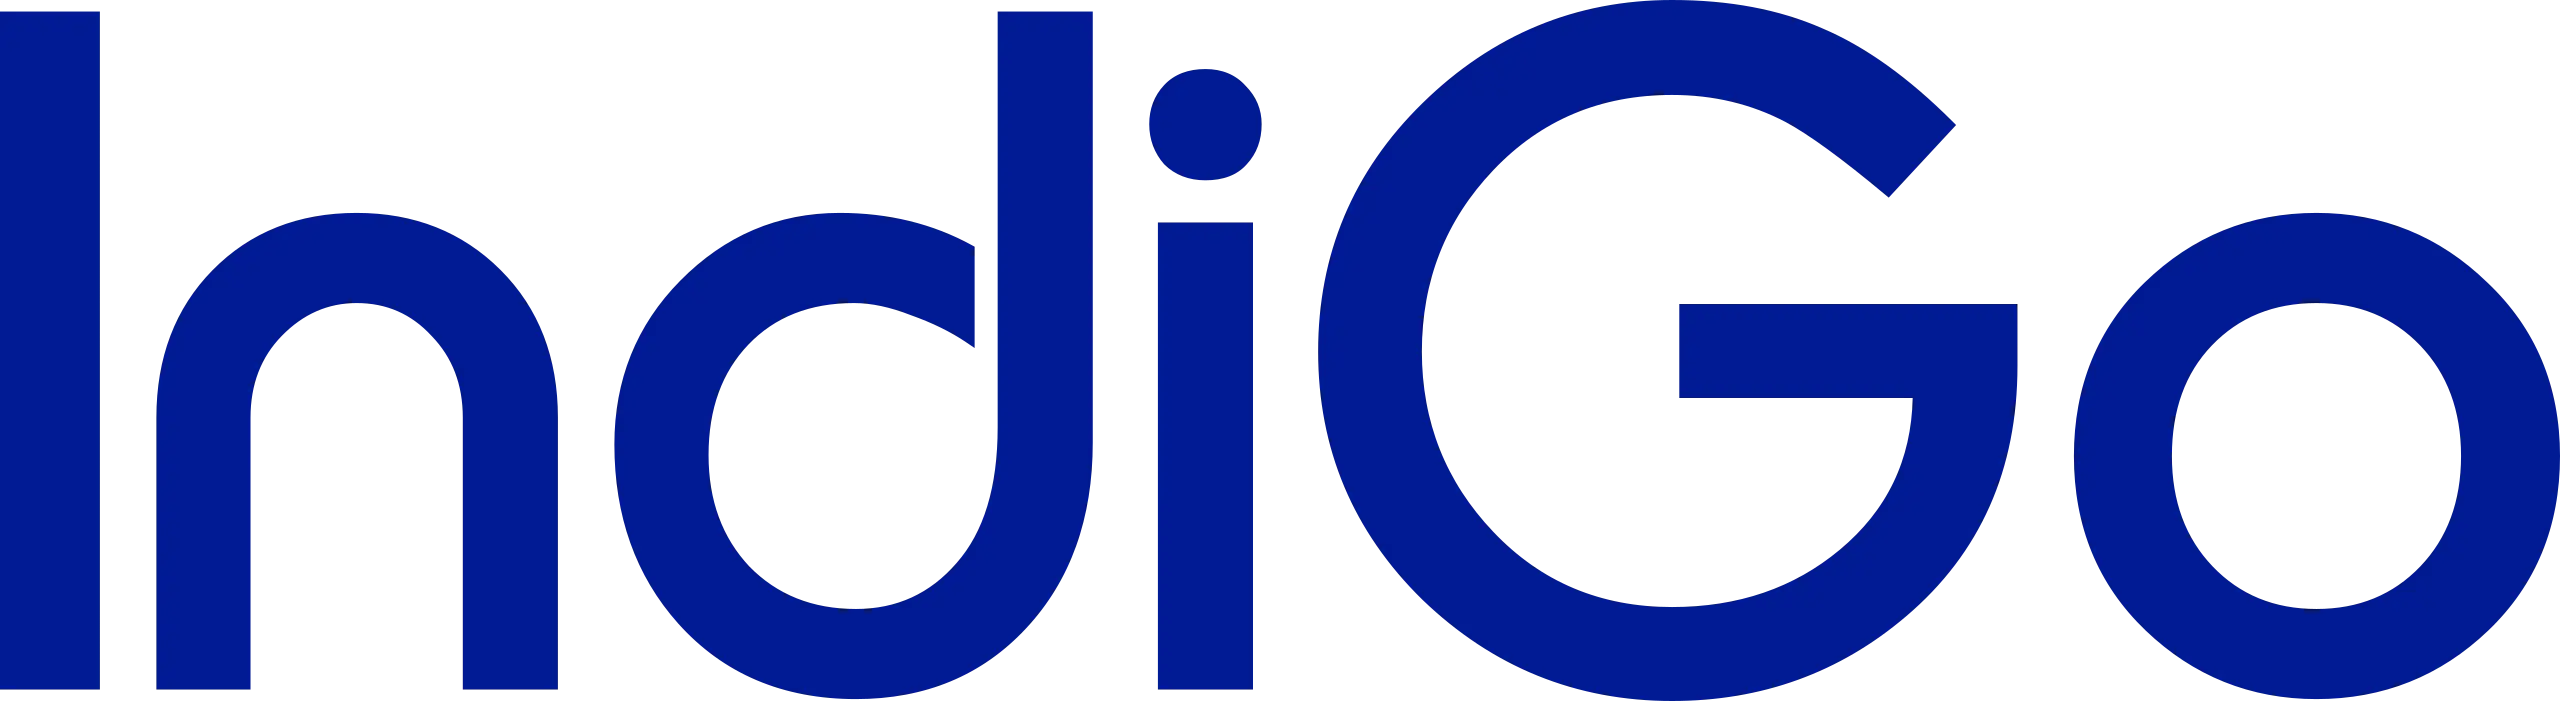 IndiGo Airlines logo.svg 1